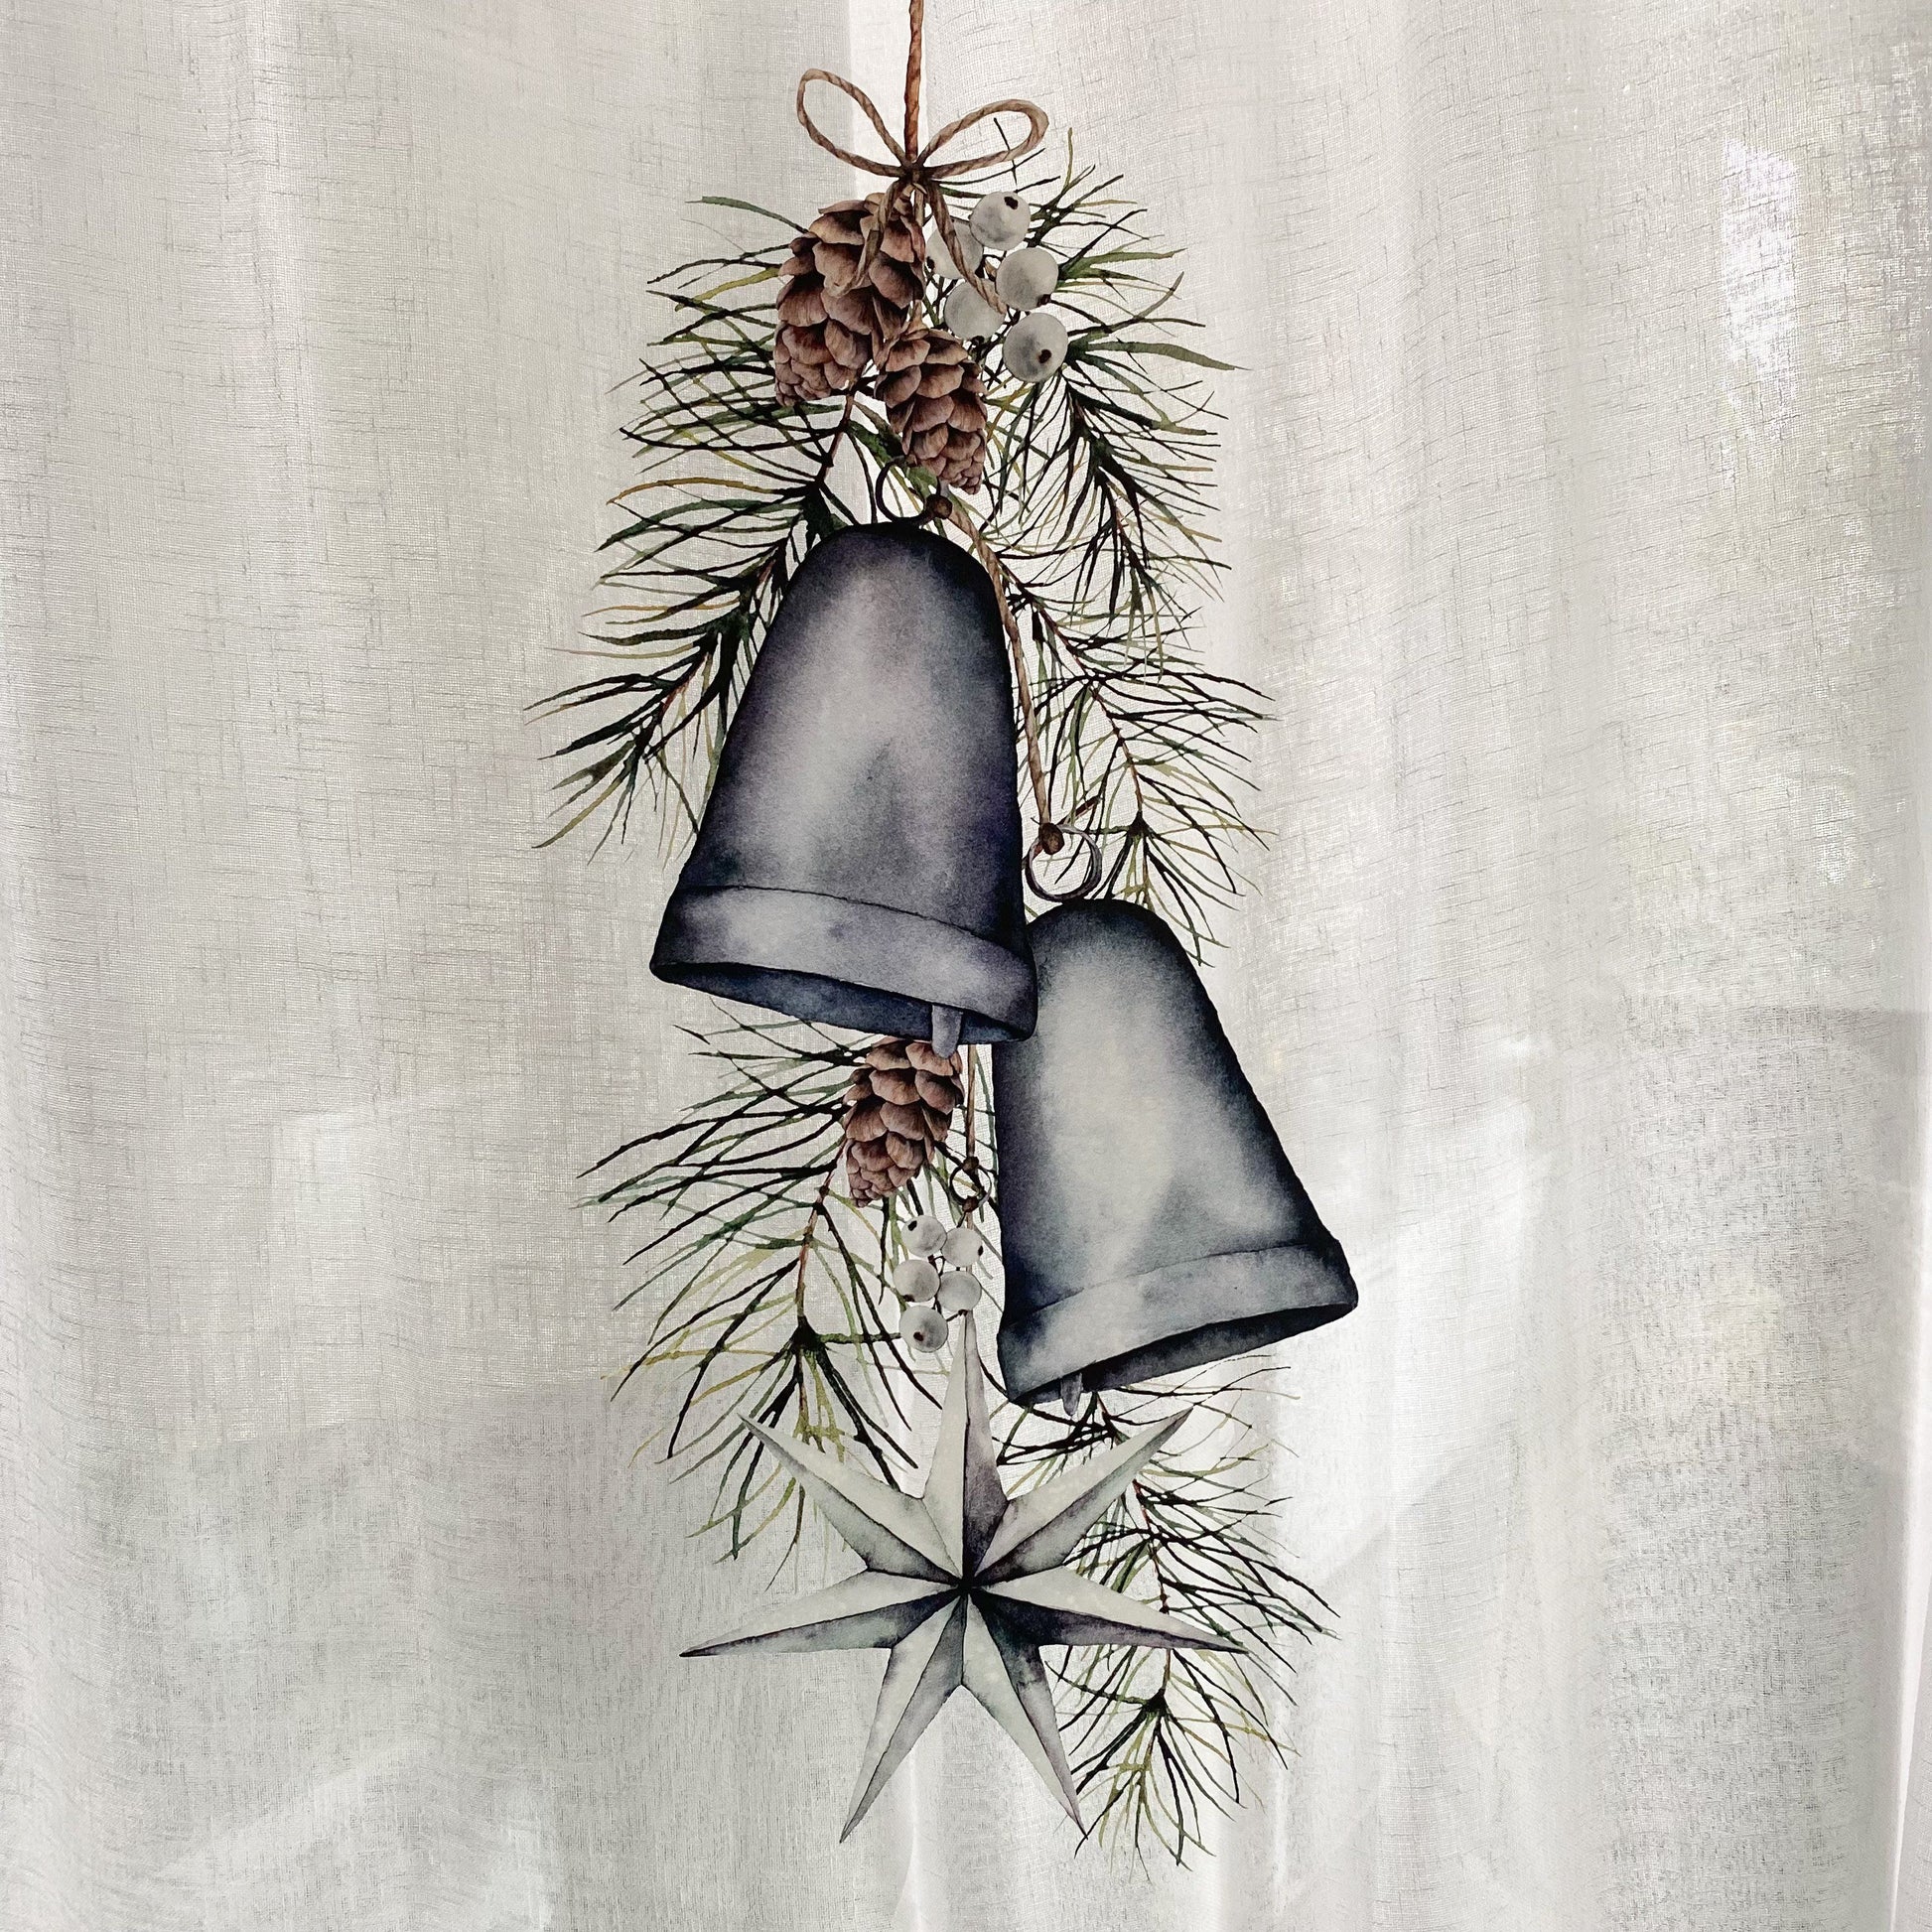 Decal Christmas Bells & Star Window Decal Dizzy Duck Designs